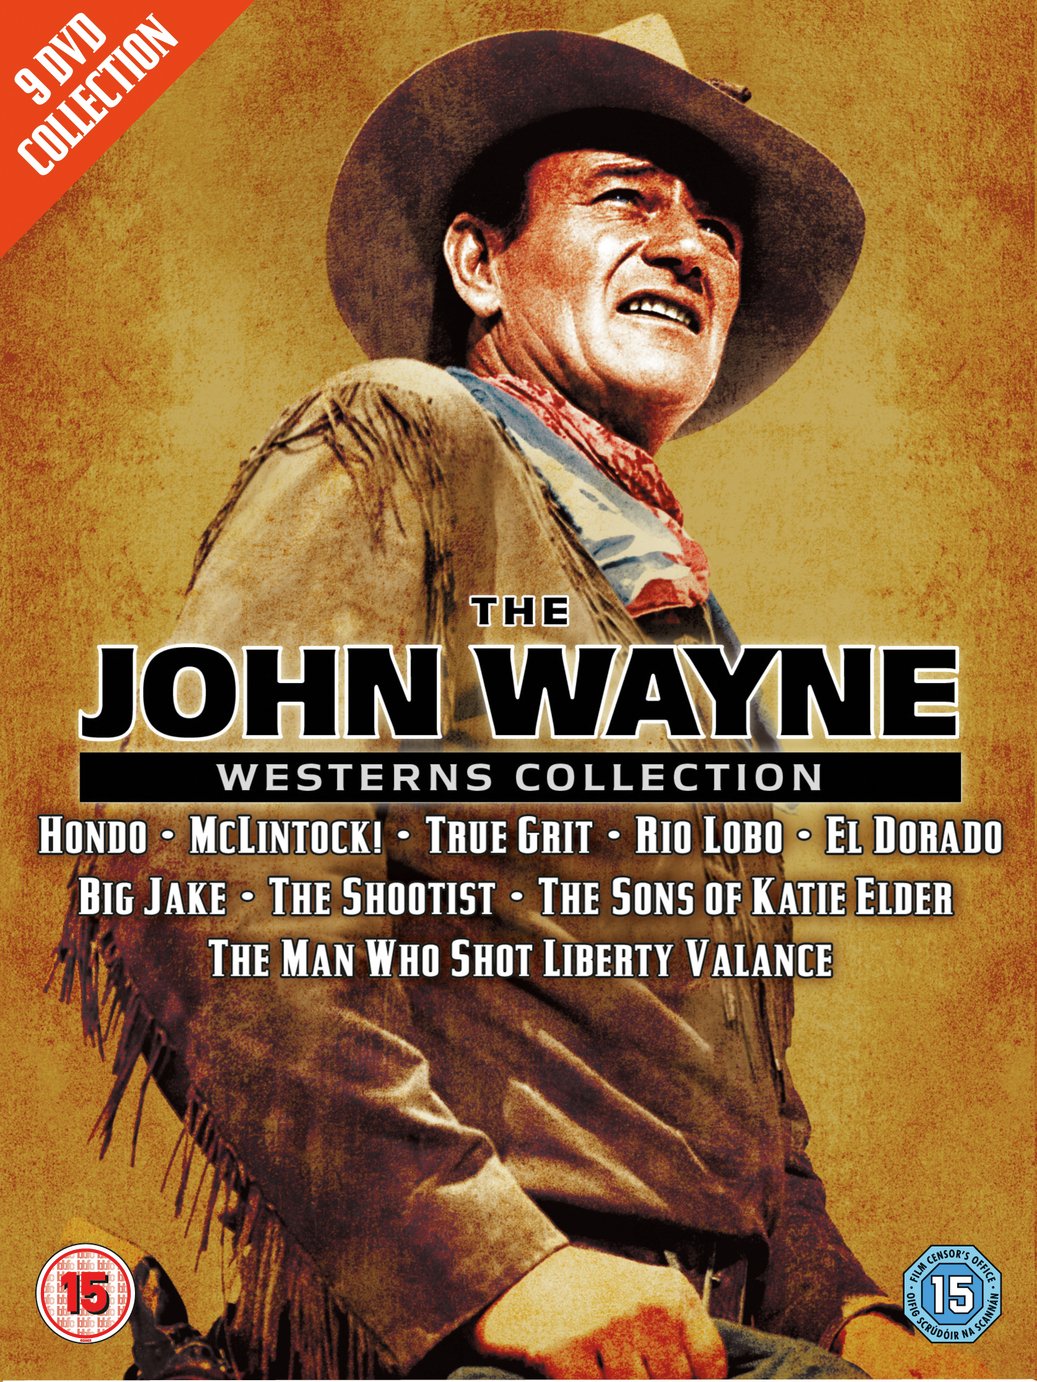 The John Wayne Westerns Collection DVD Box Set Review